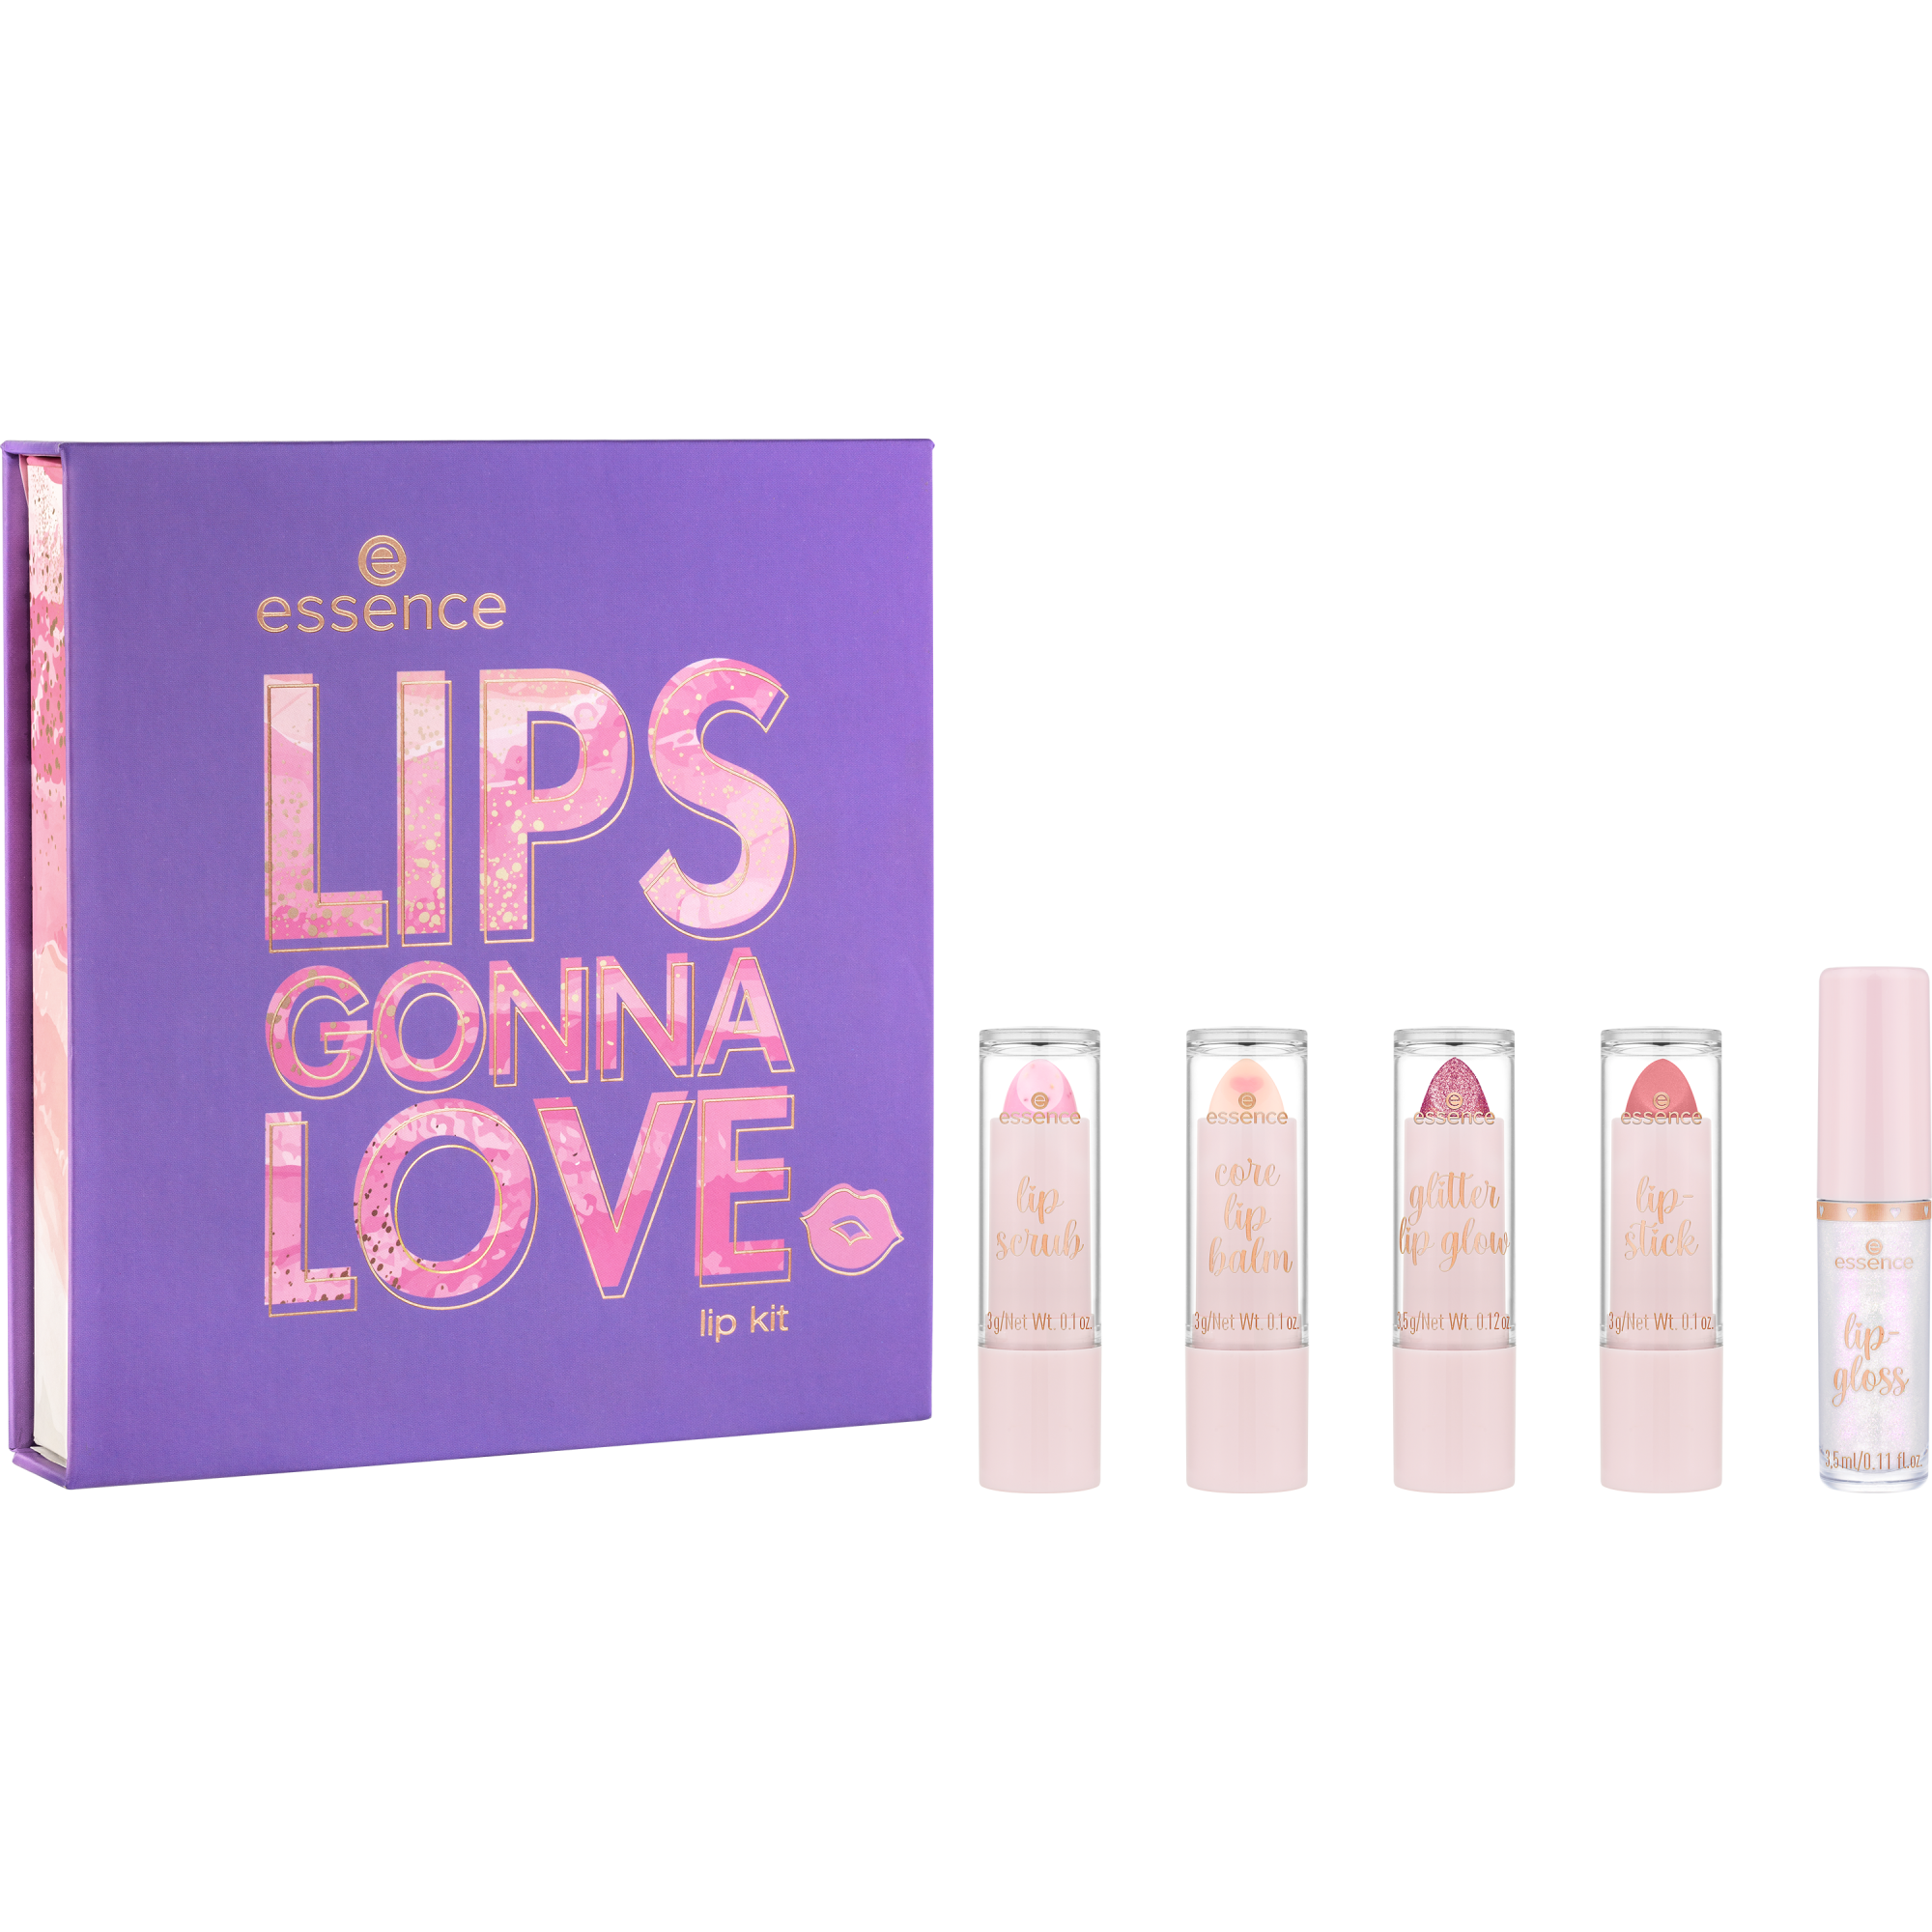 LIPS GONNA LOVE lip kit